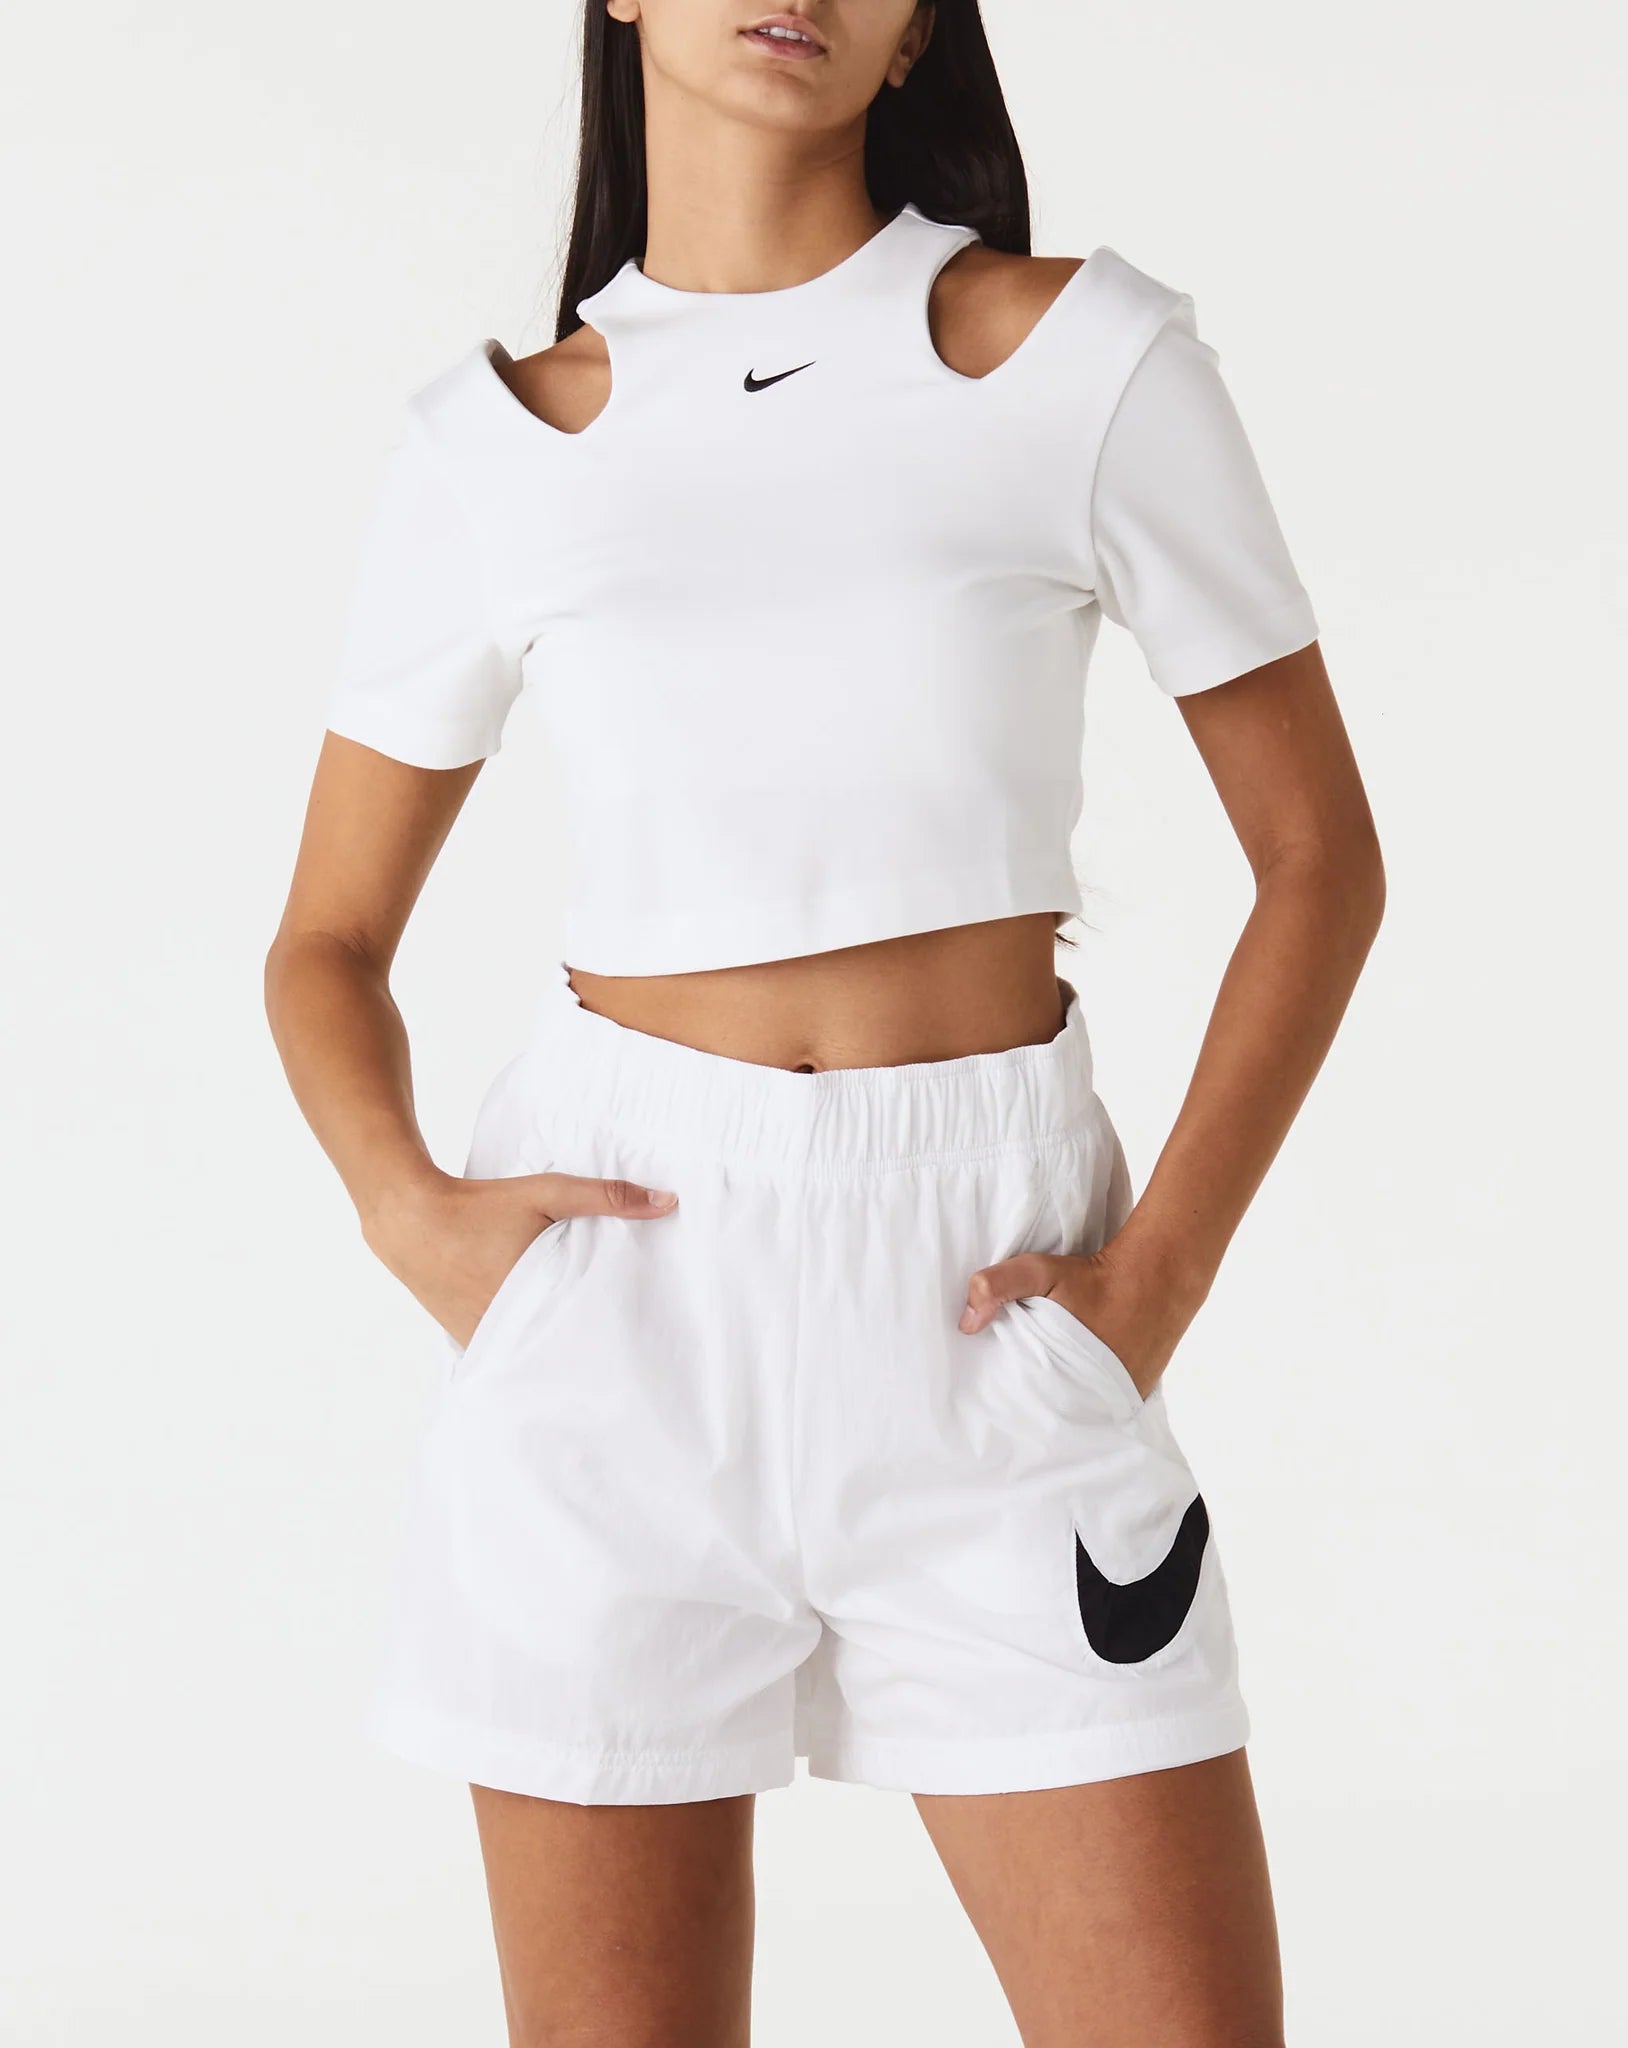 Women's Cropped Tops & T-Shirts. Nike BE